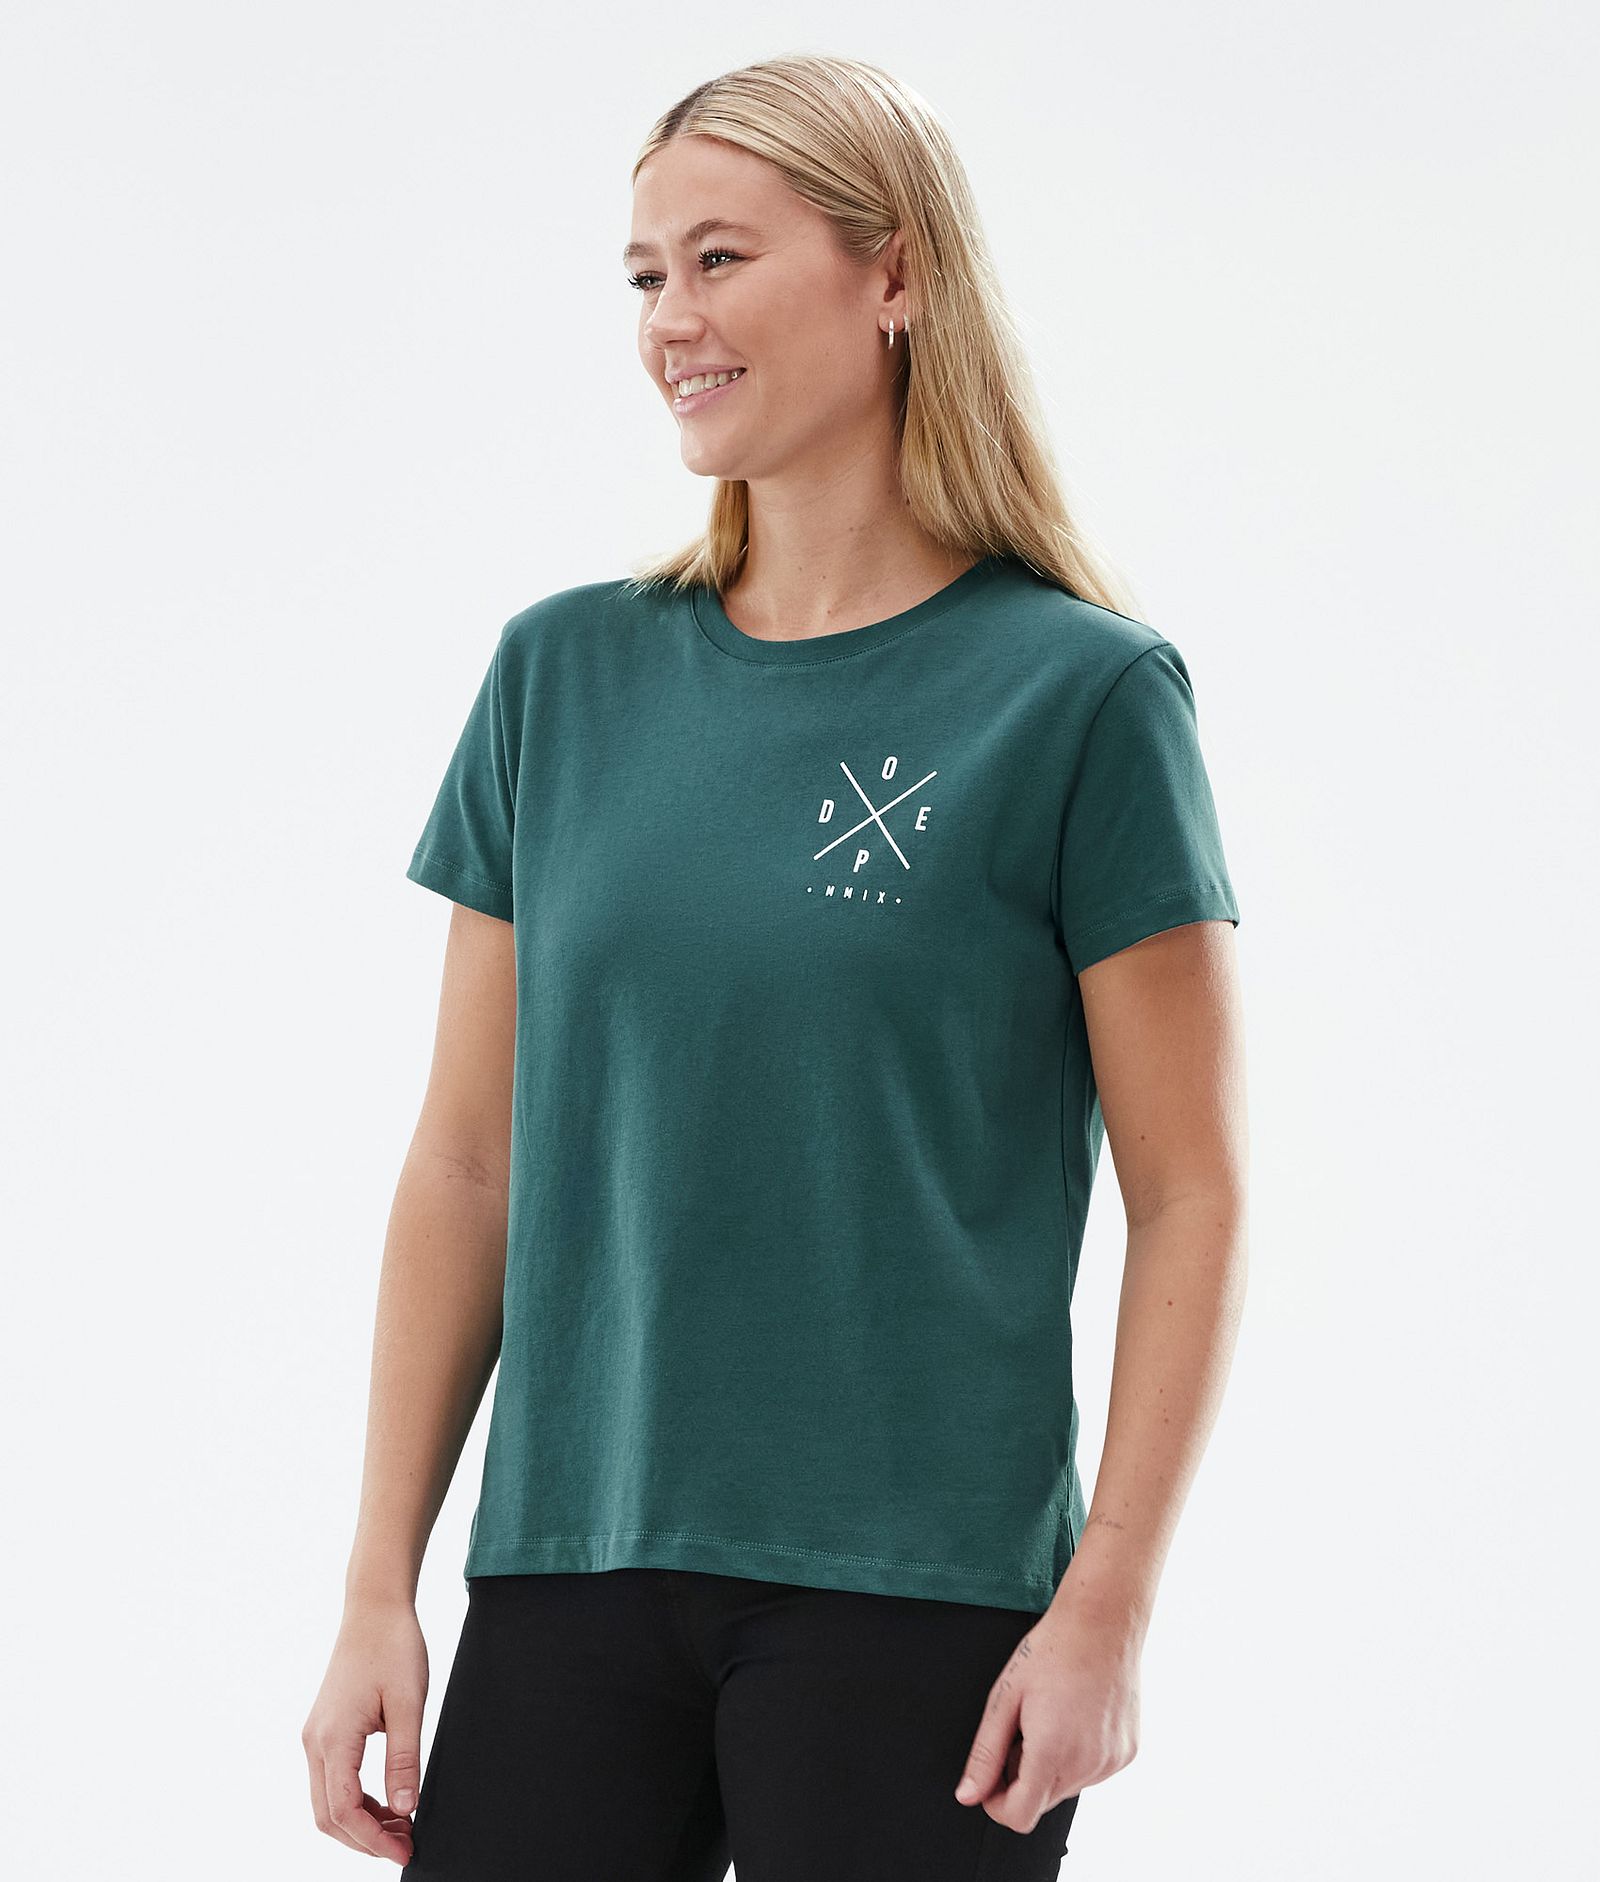 Standard W Camiseta Mujer 2X-Up Bottle Green